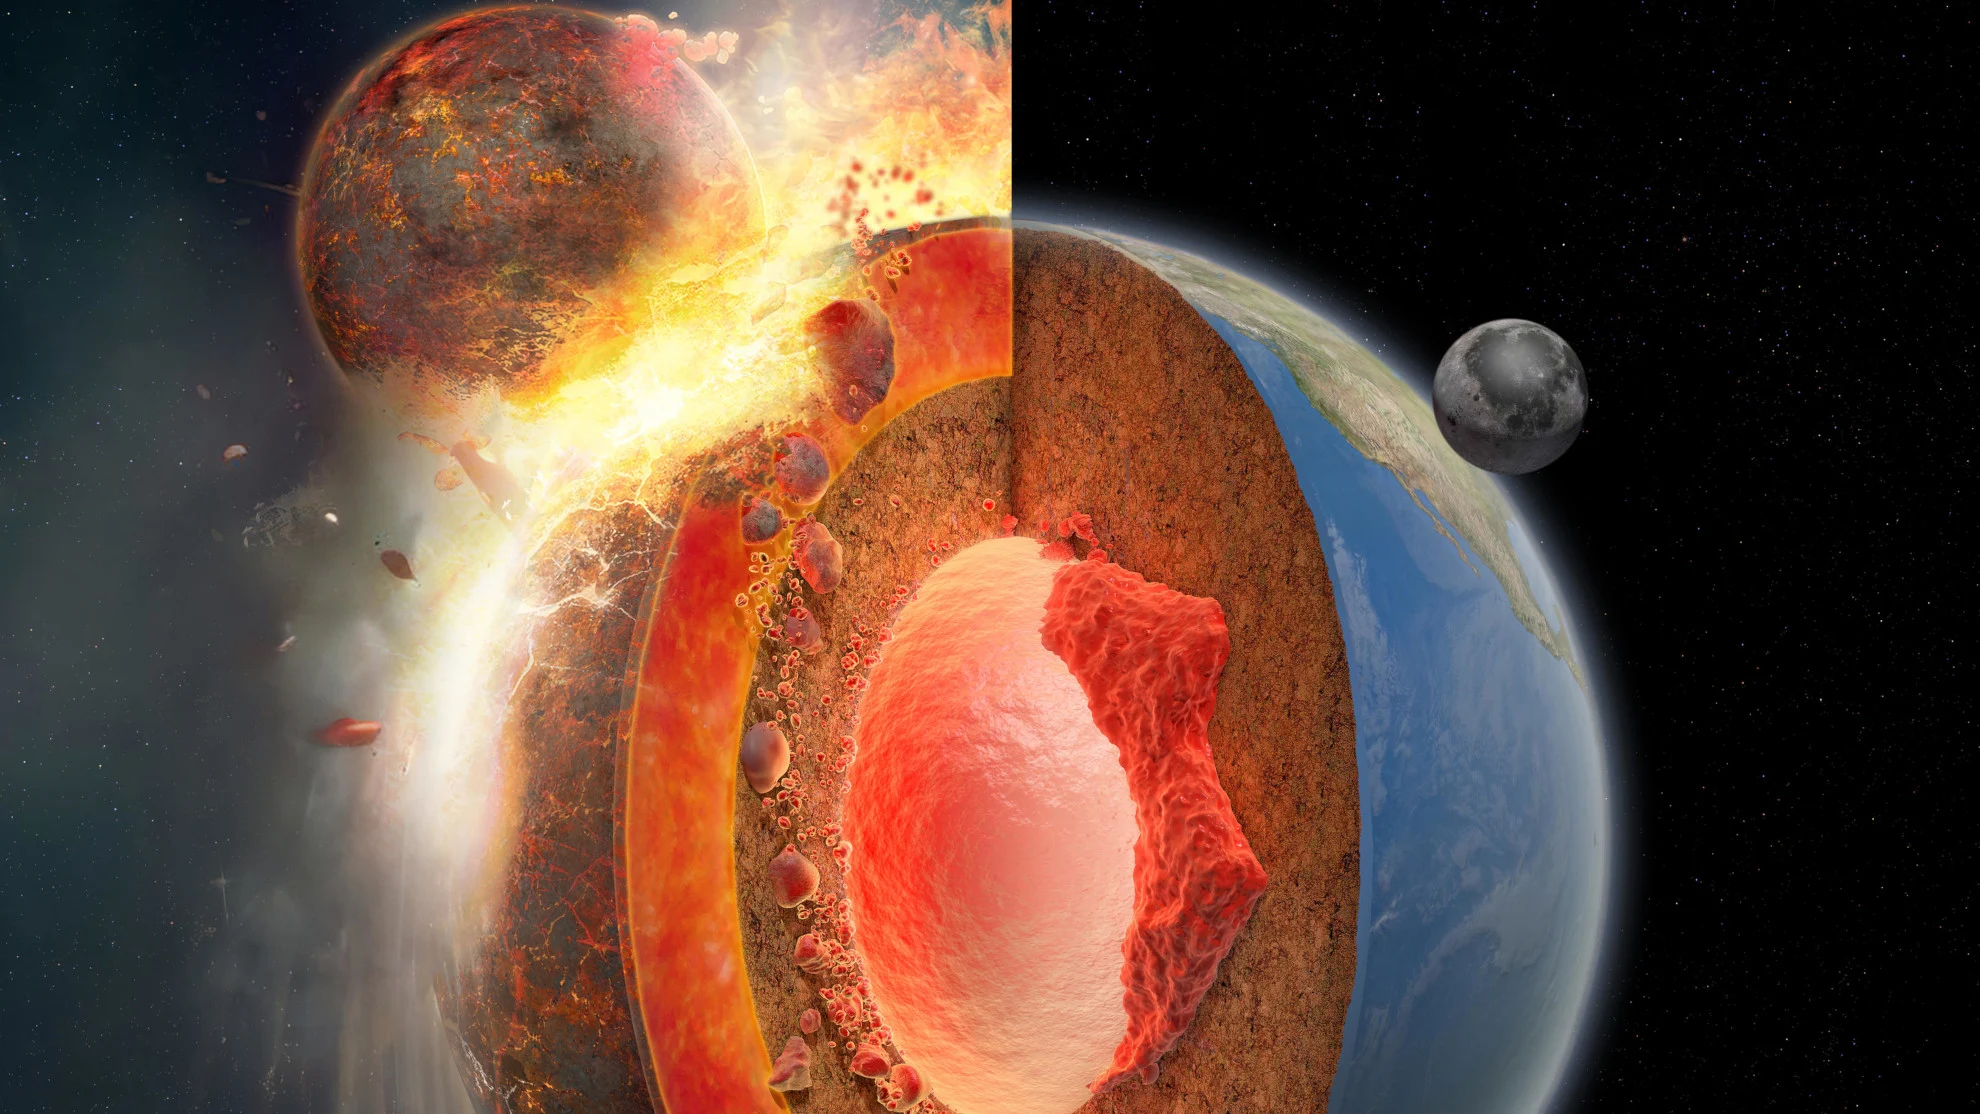 Blobs of an alien world may lurk deep inside the Earth